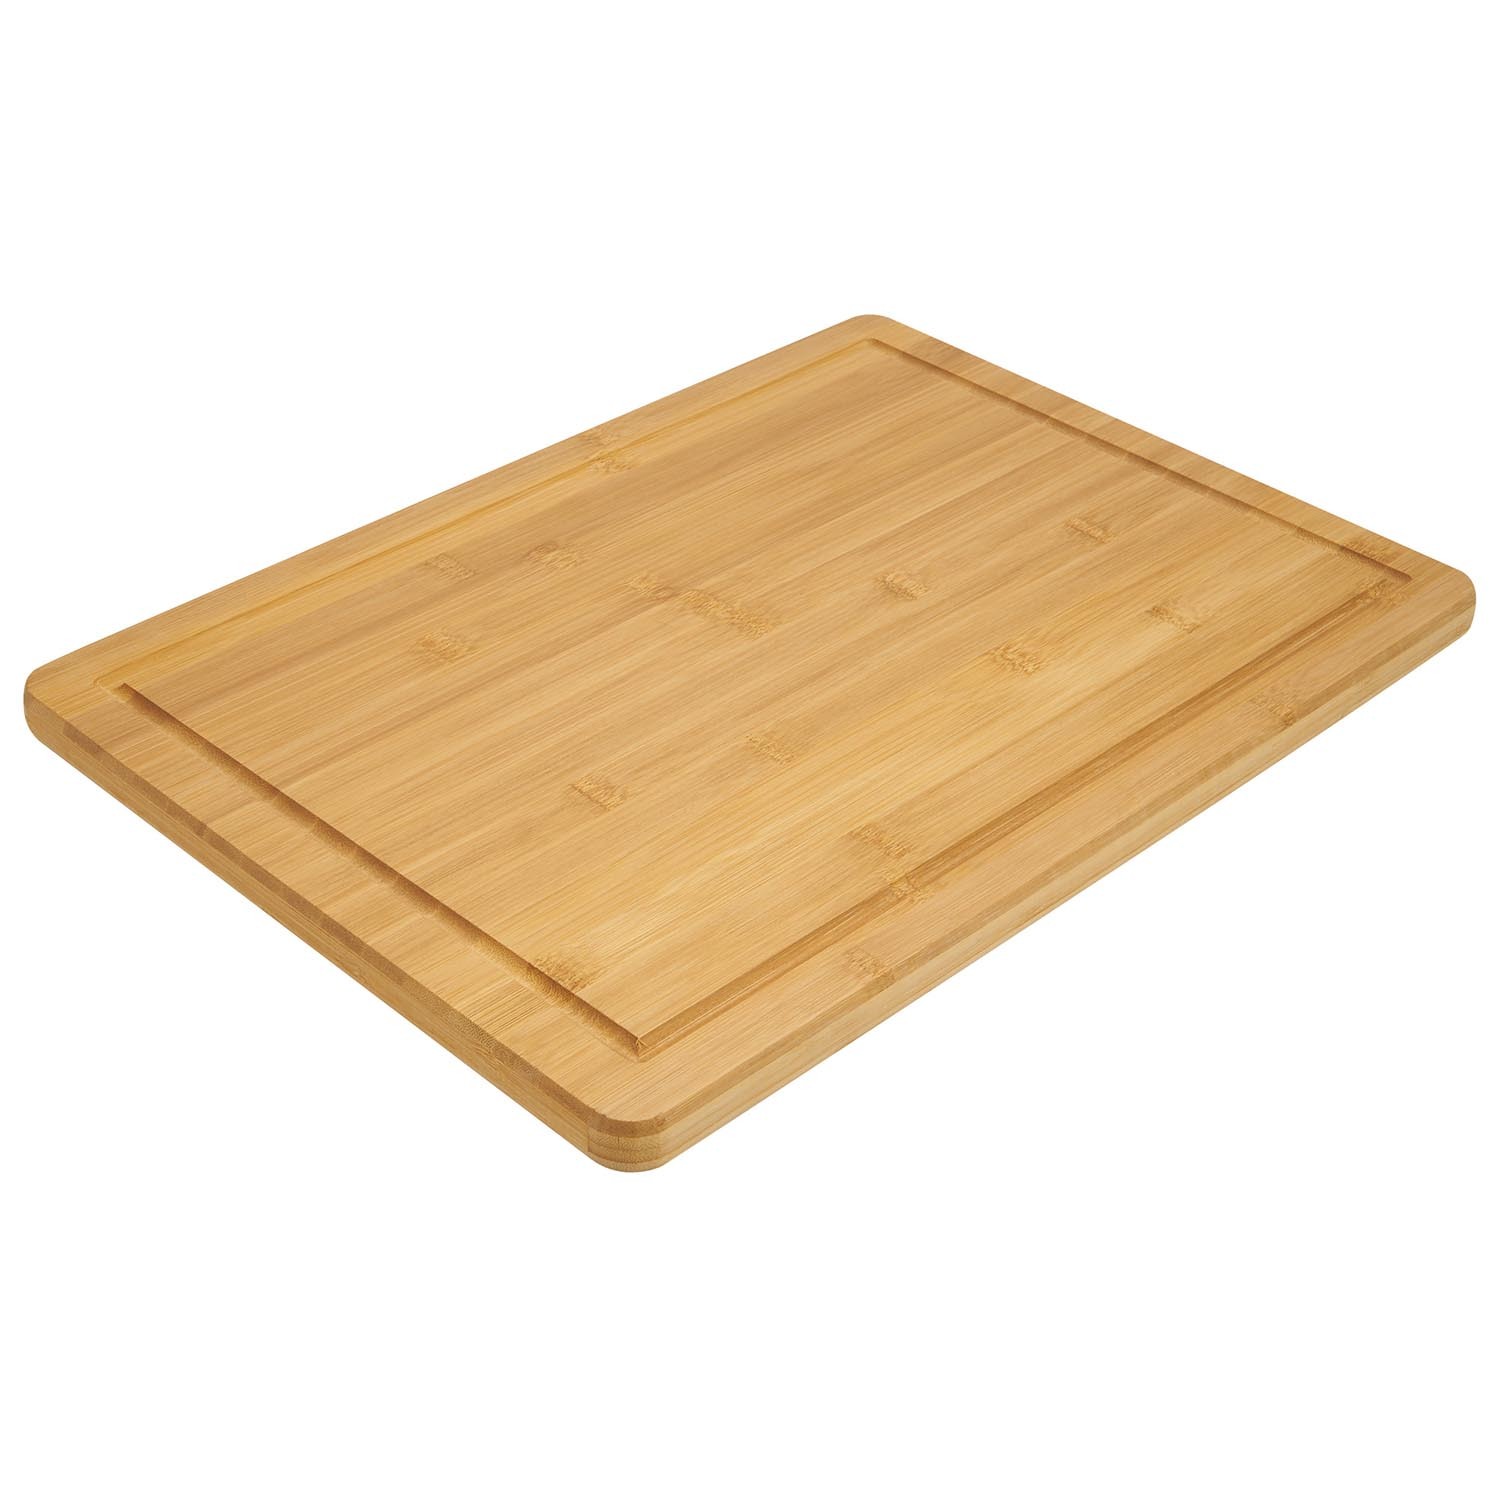 Premium Bamboo Chopping Board - Natural / Large Image 2